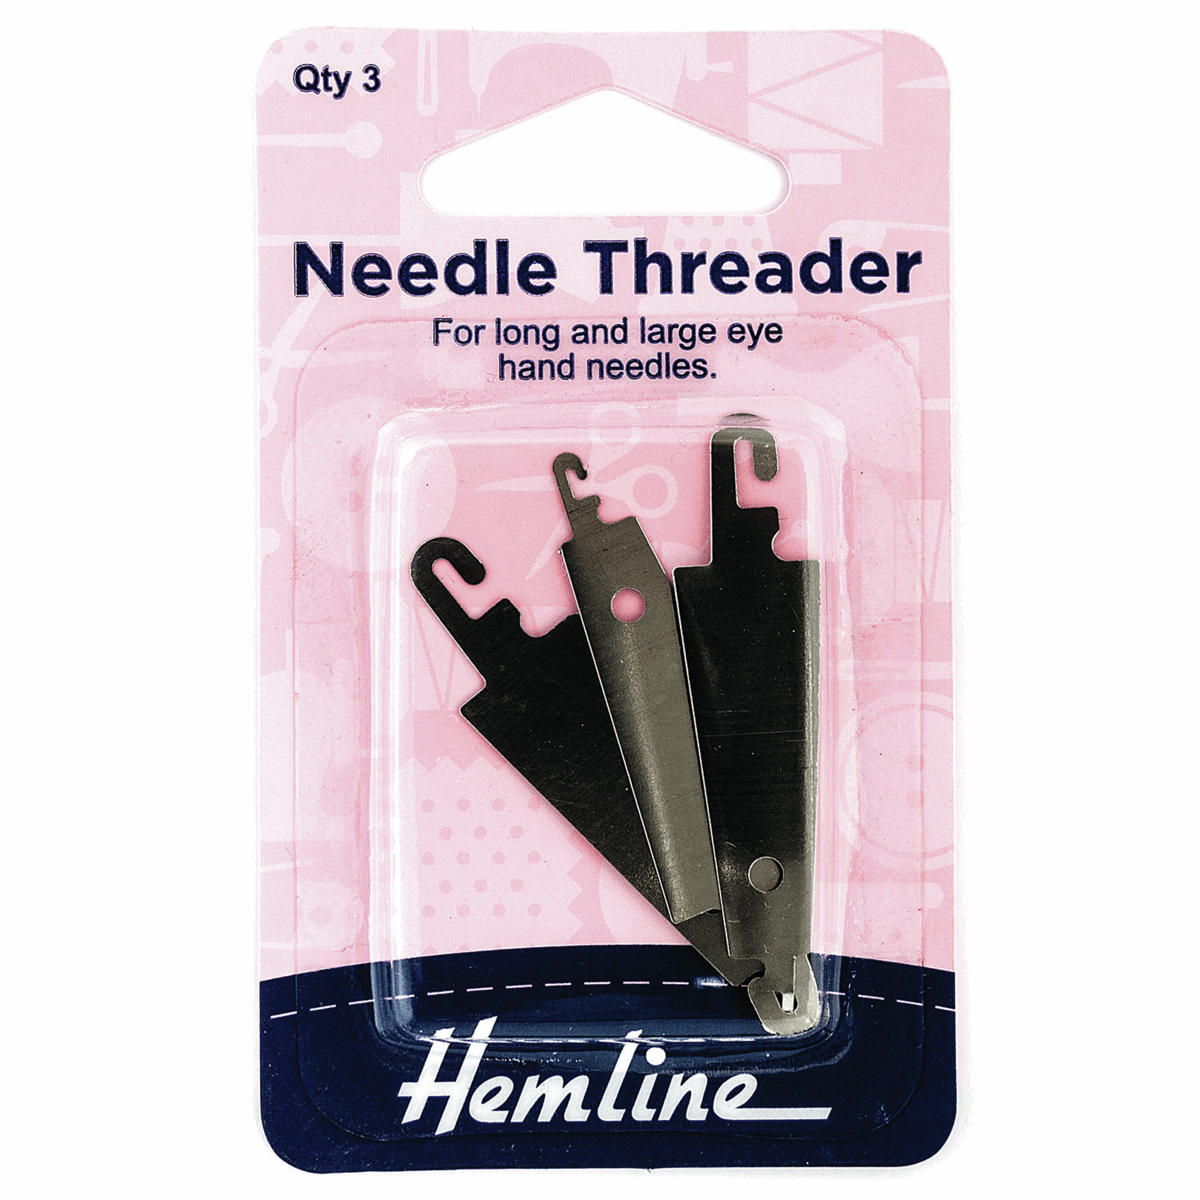 NEEDLE THREADER - For long & large eye hand needles